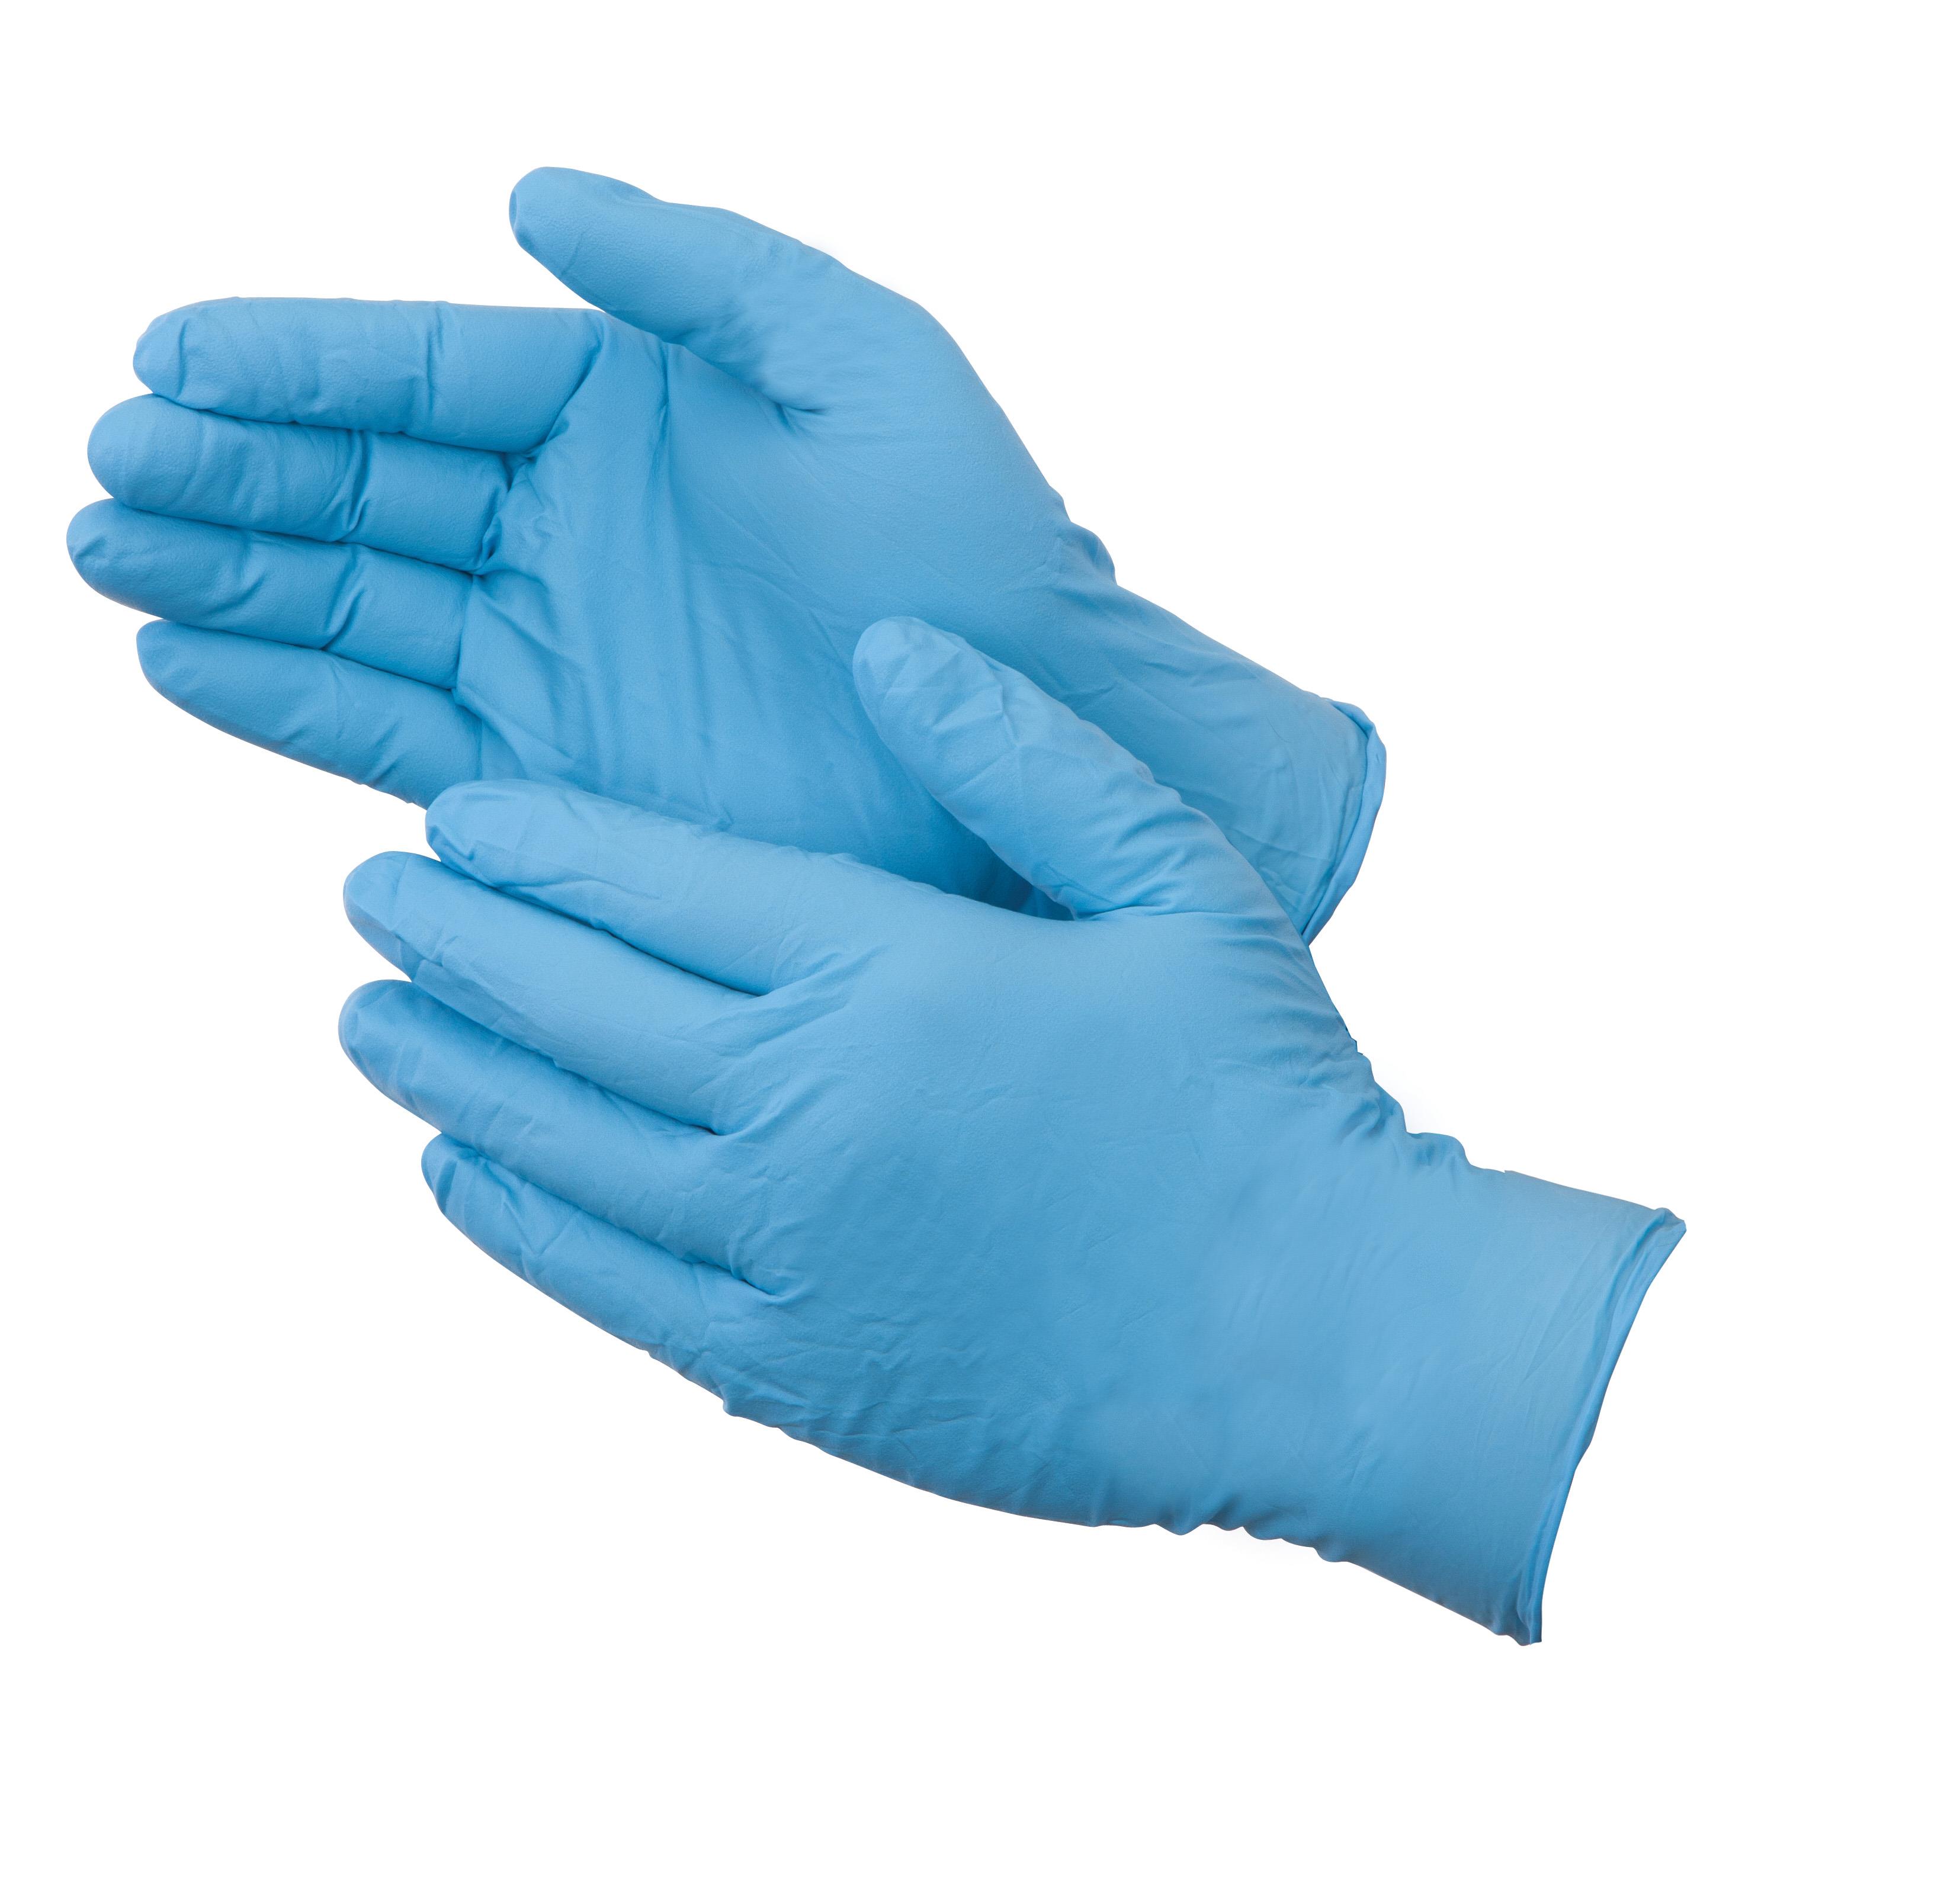 4 MIL POWDER FREE BLUE NITRILE 100/BX - Disposable Gloves